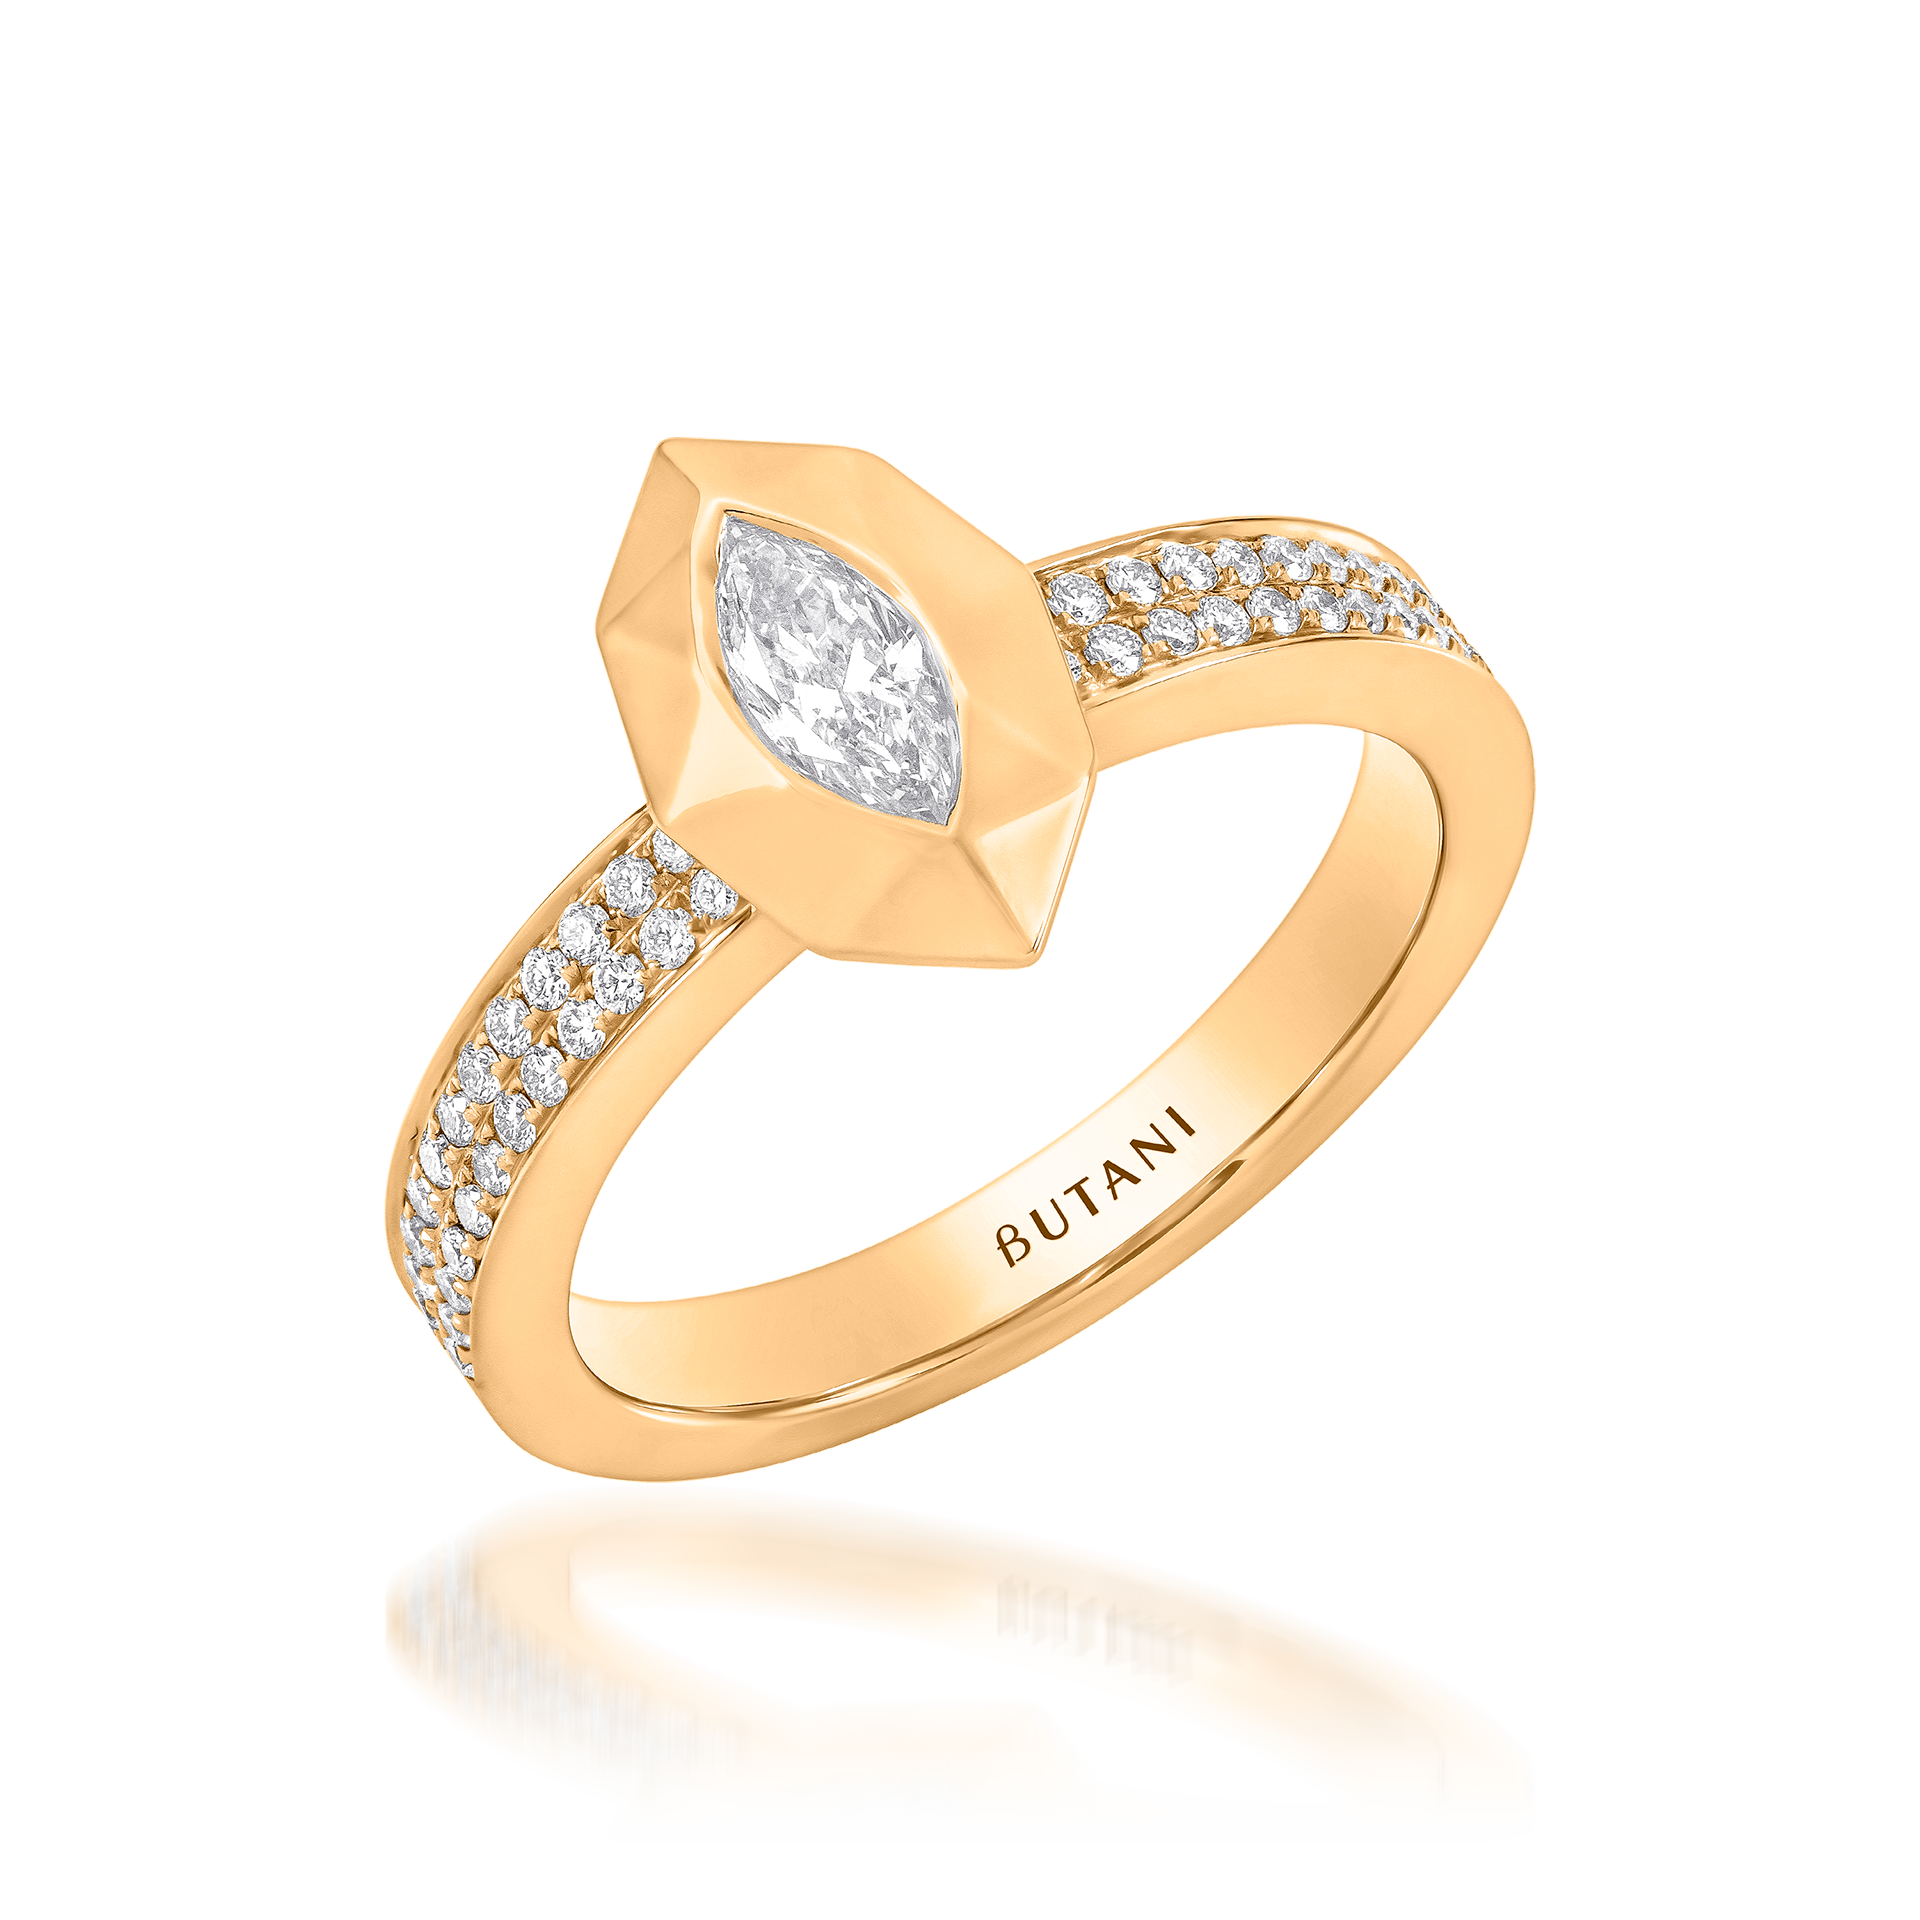 Metropolitan Marquise-cut Diamond Ring in 18K Yellow Gold